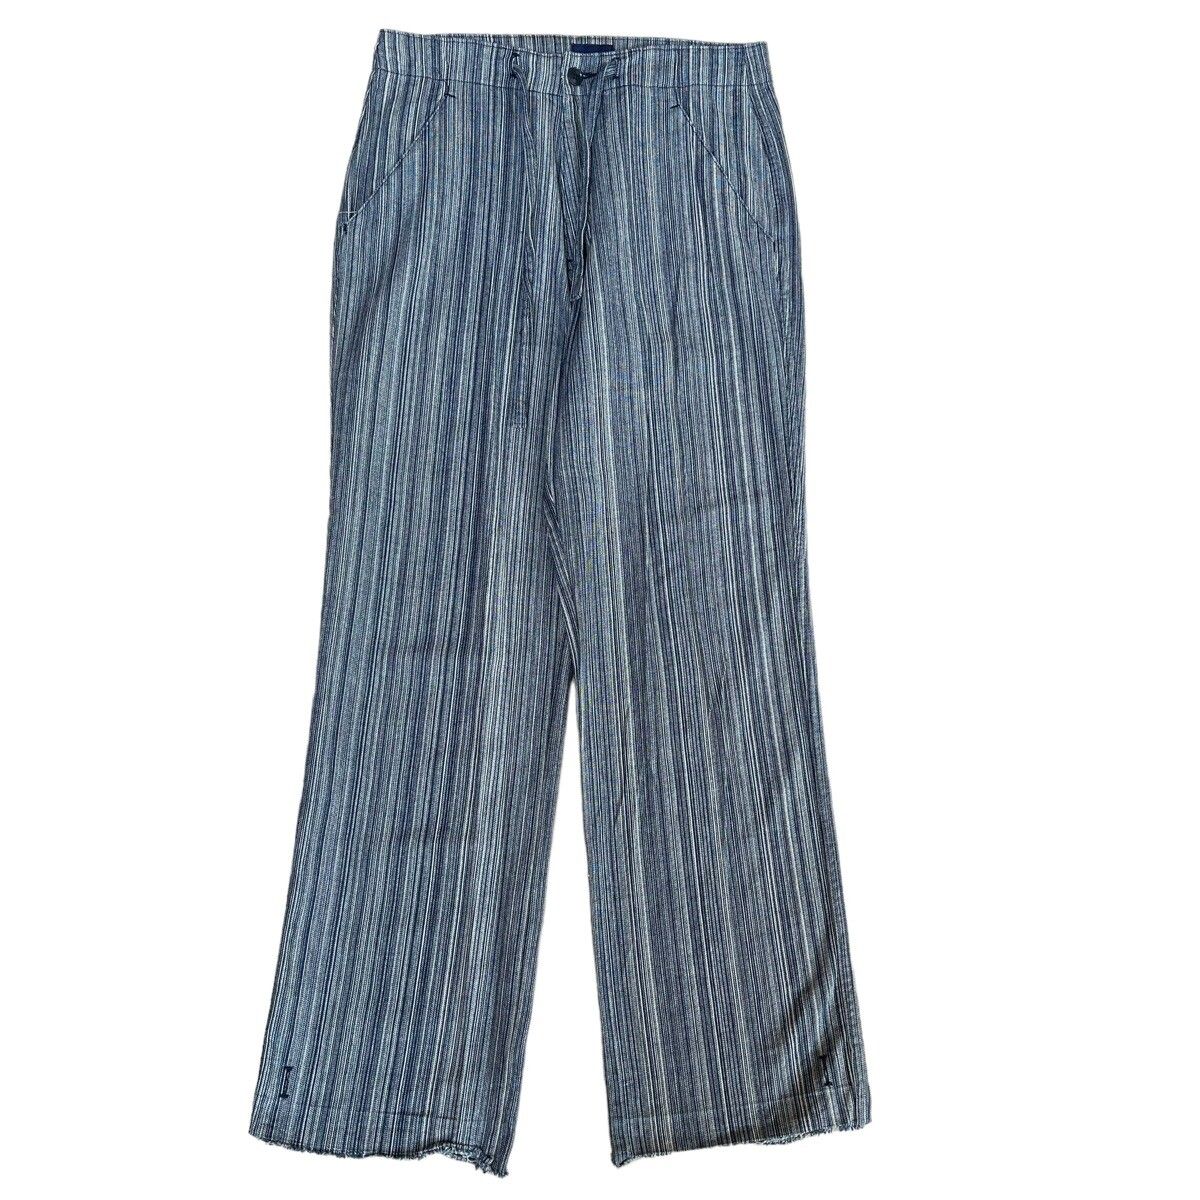 Beams Japan Inspired Kapital Style Pants Size 31 - 2